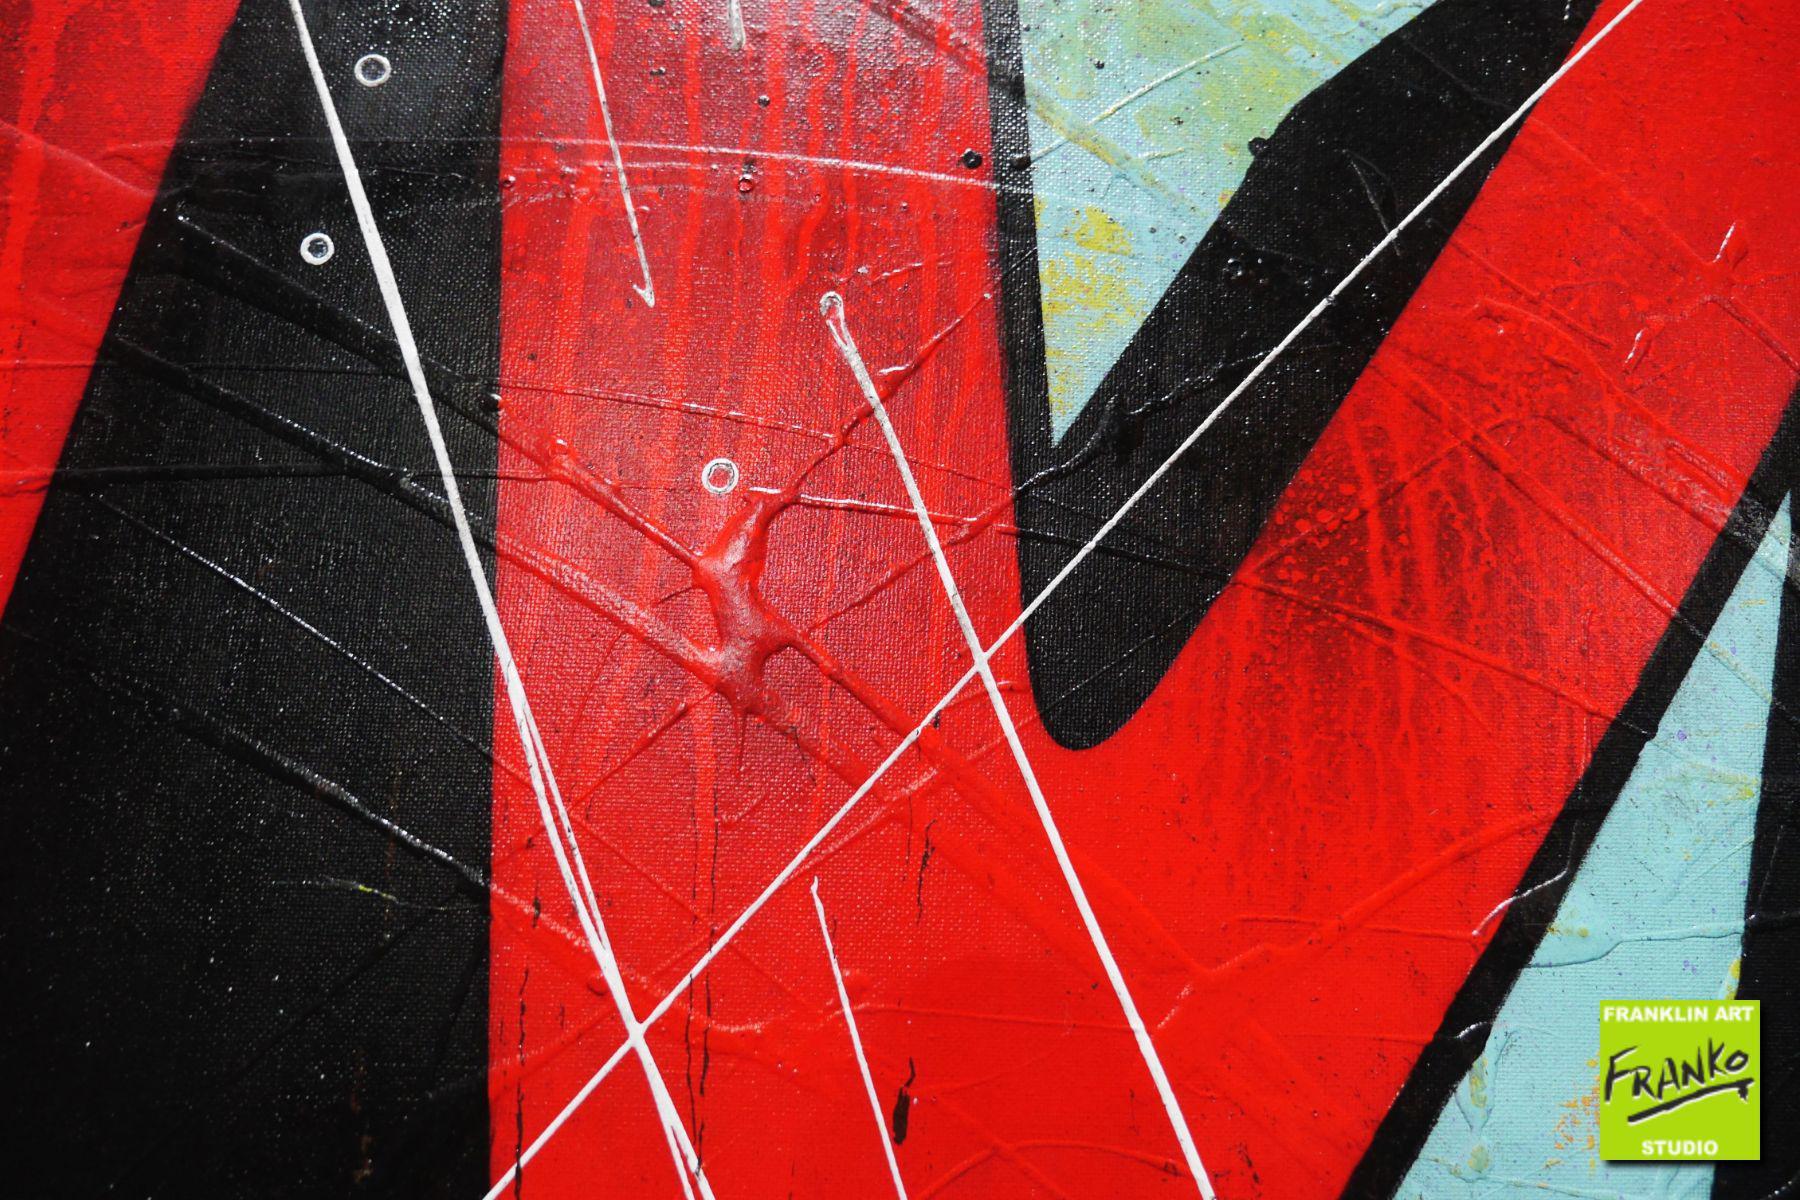 L.O.V.E 160cm x 100cm Colourful Love Textured Urban Pop Art Painting (SOLD)